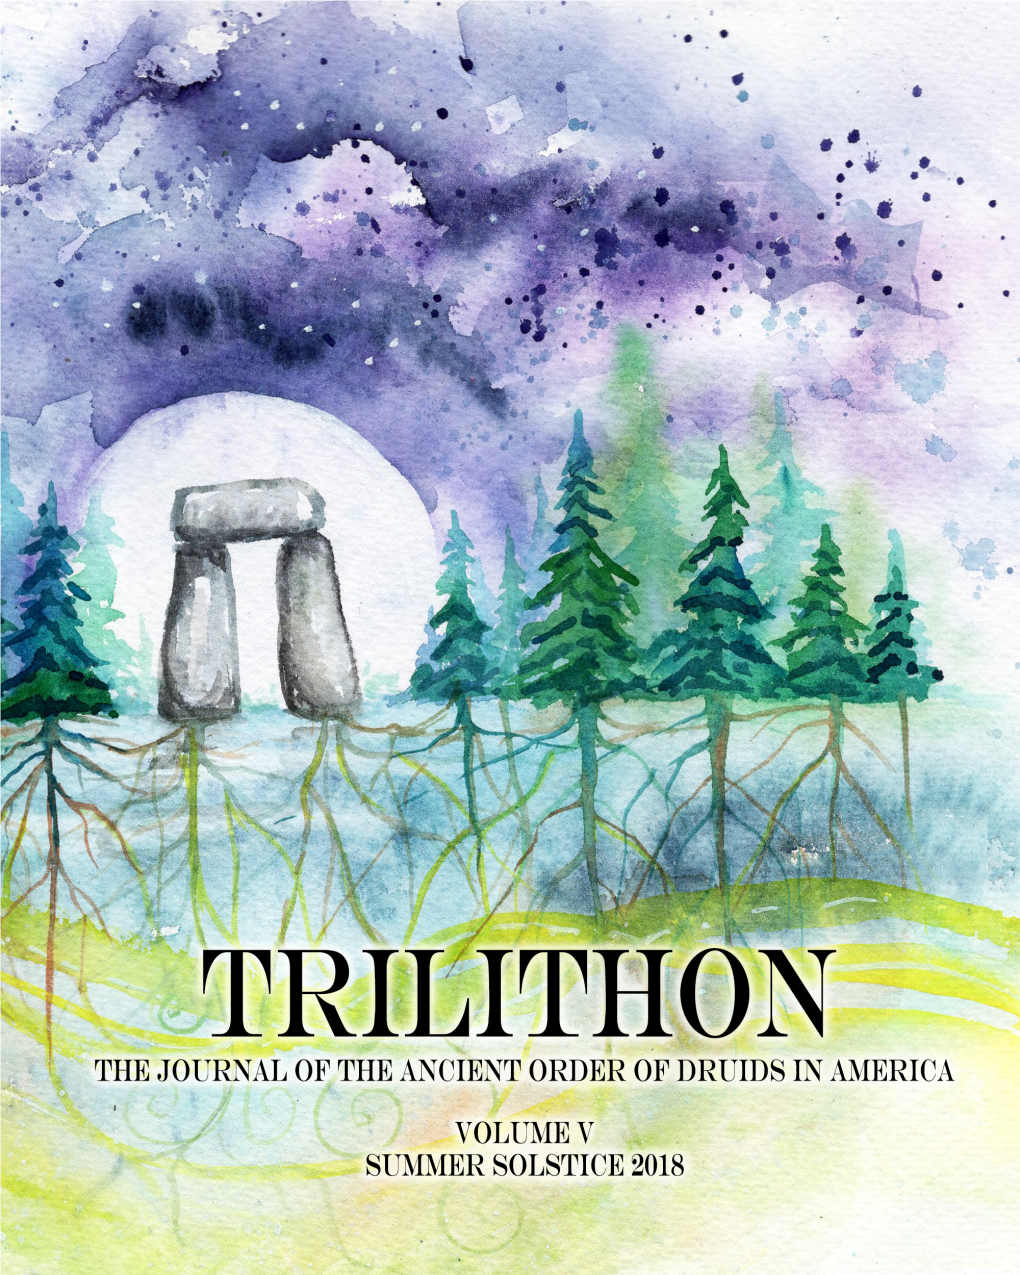 Download a Copy of Trilithon Vol5 Here